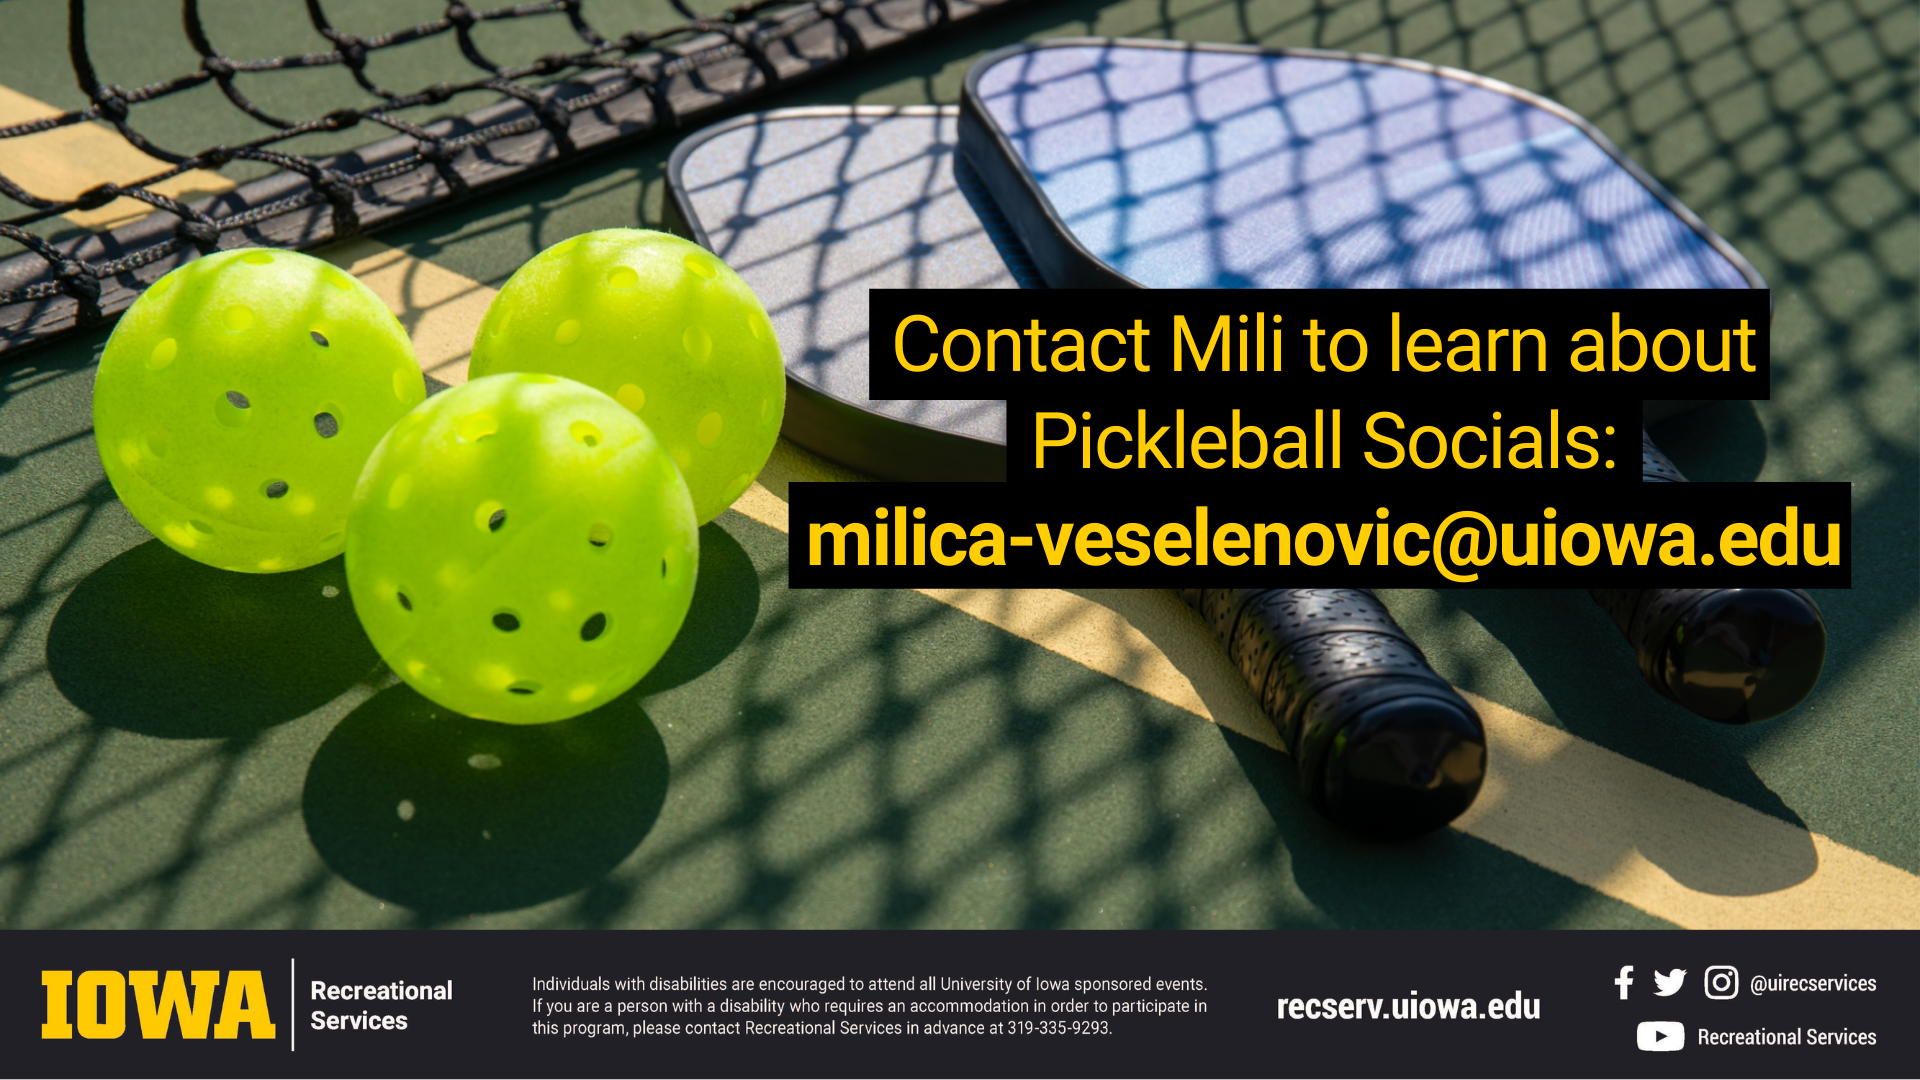 Contact Mili to learn about Pickleball Socials: milica-veselenovic@uiowa.edu